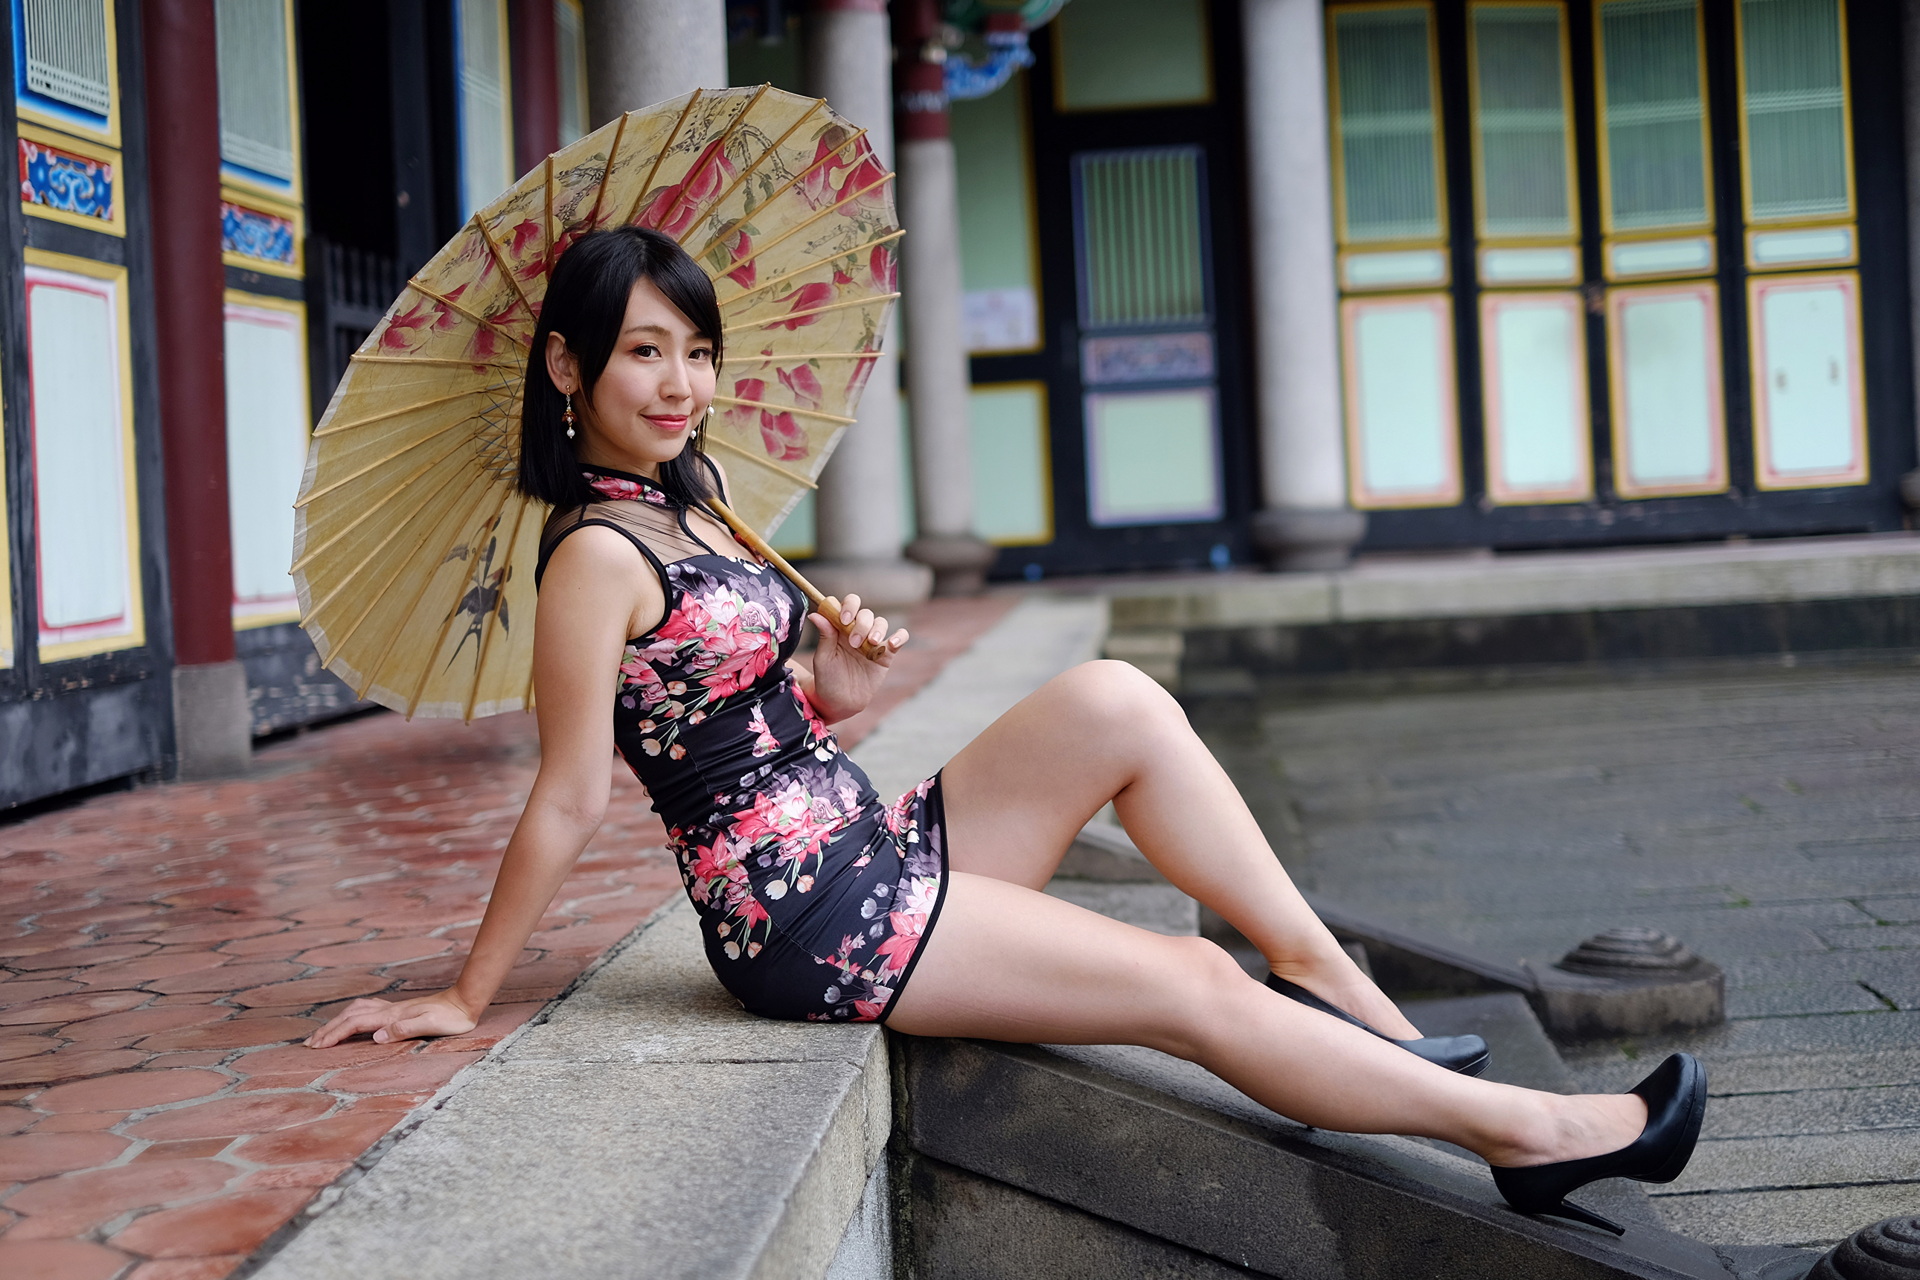 Asian Model Women Long Hair Dark Hair Sitting High Heels 1920x1280